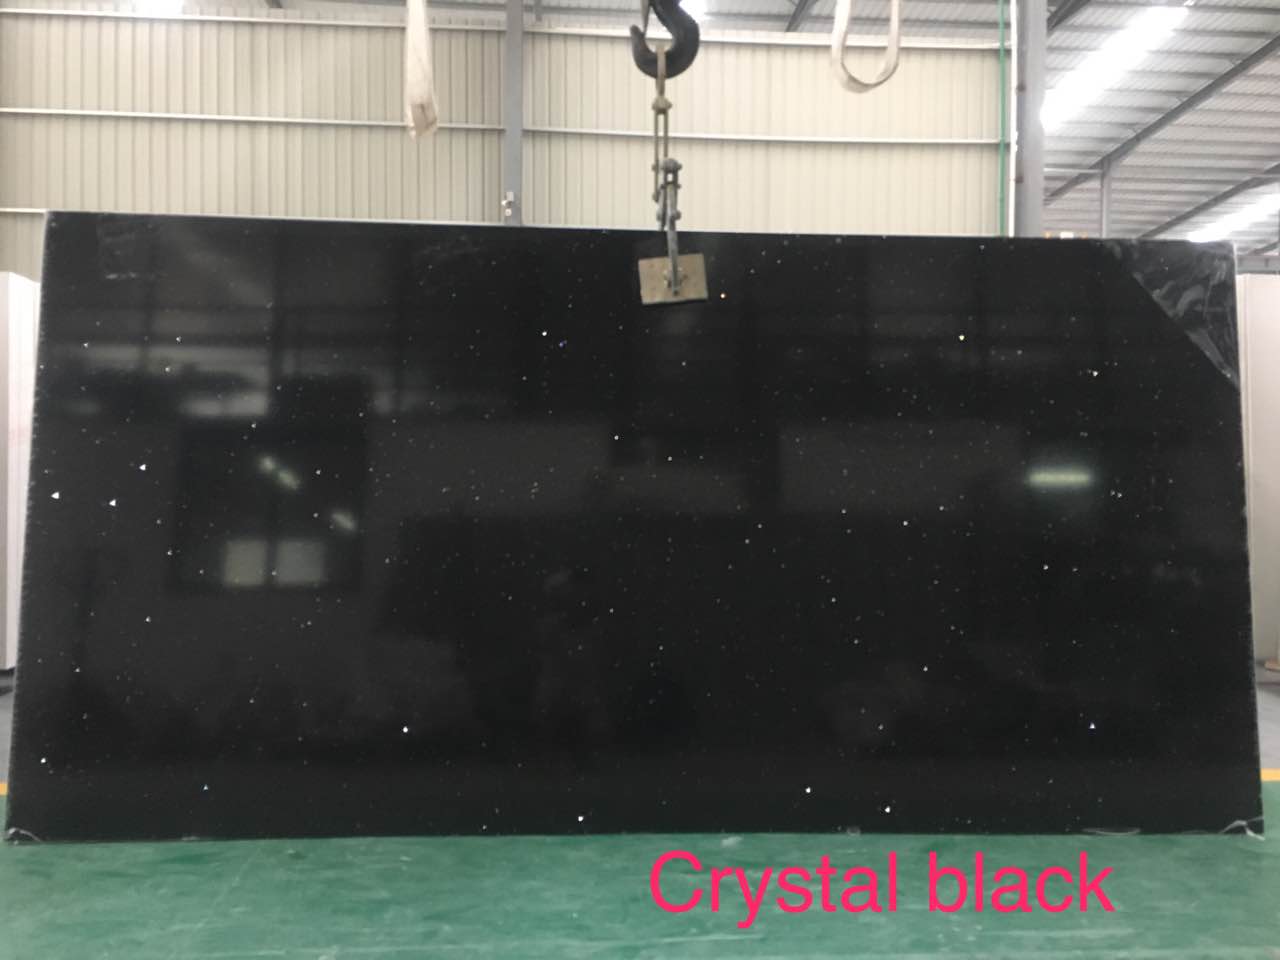 Crystal black quartz slab